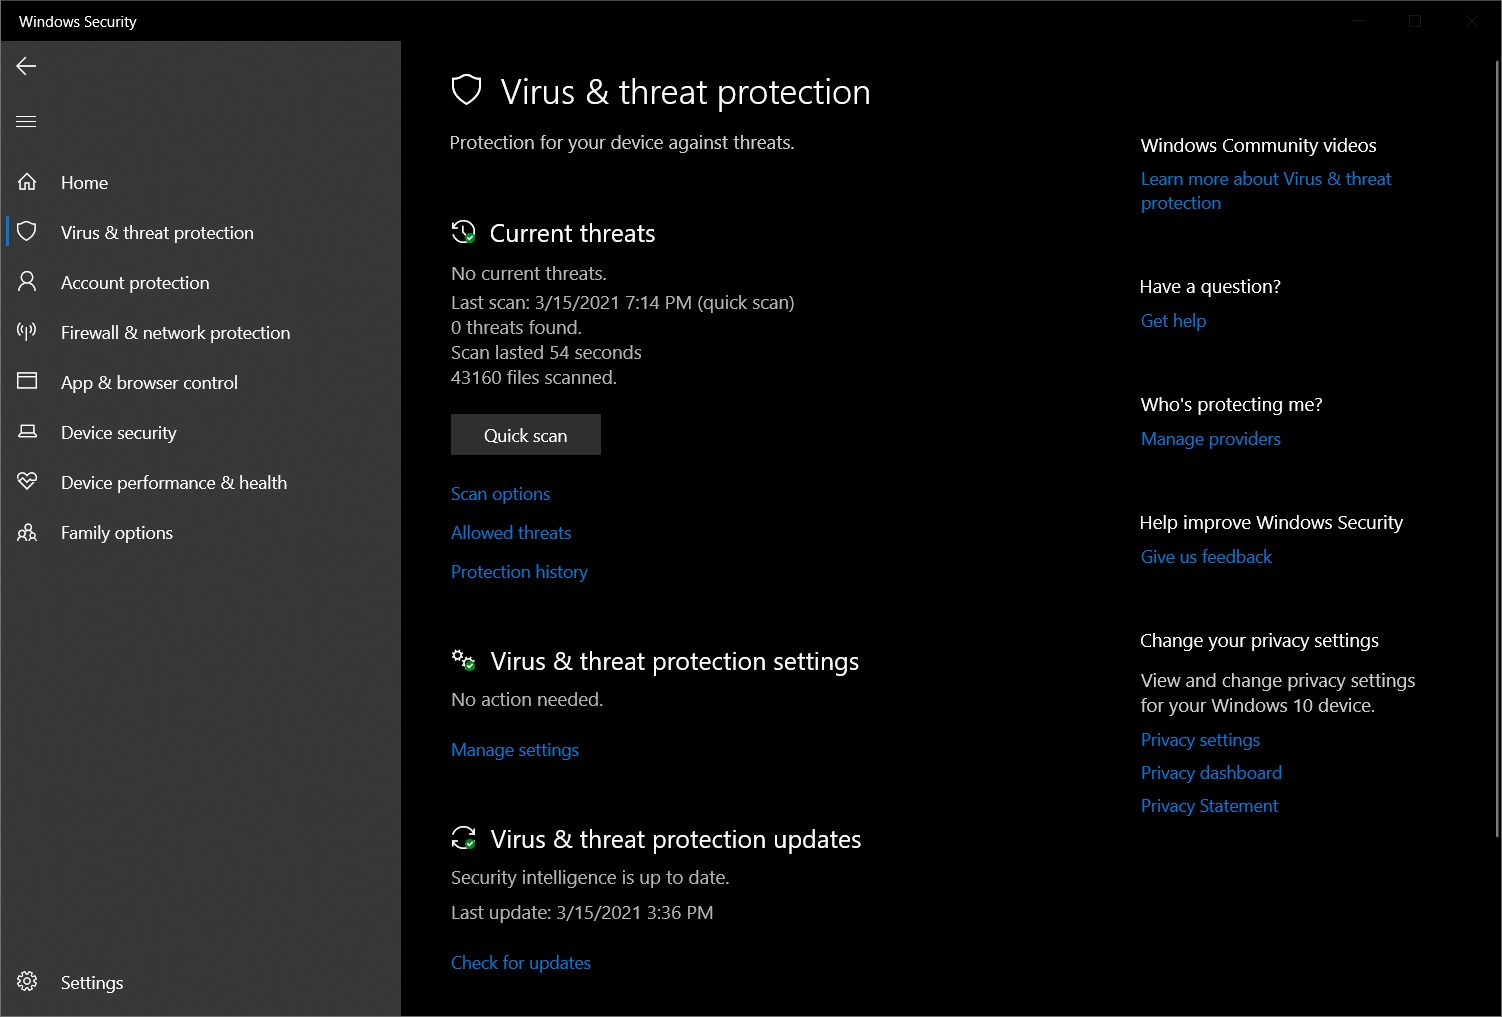 Windows Security in Windows 10